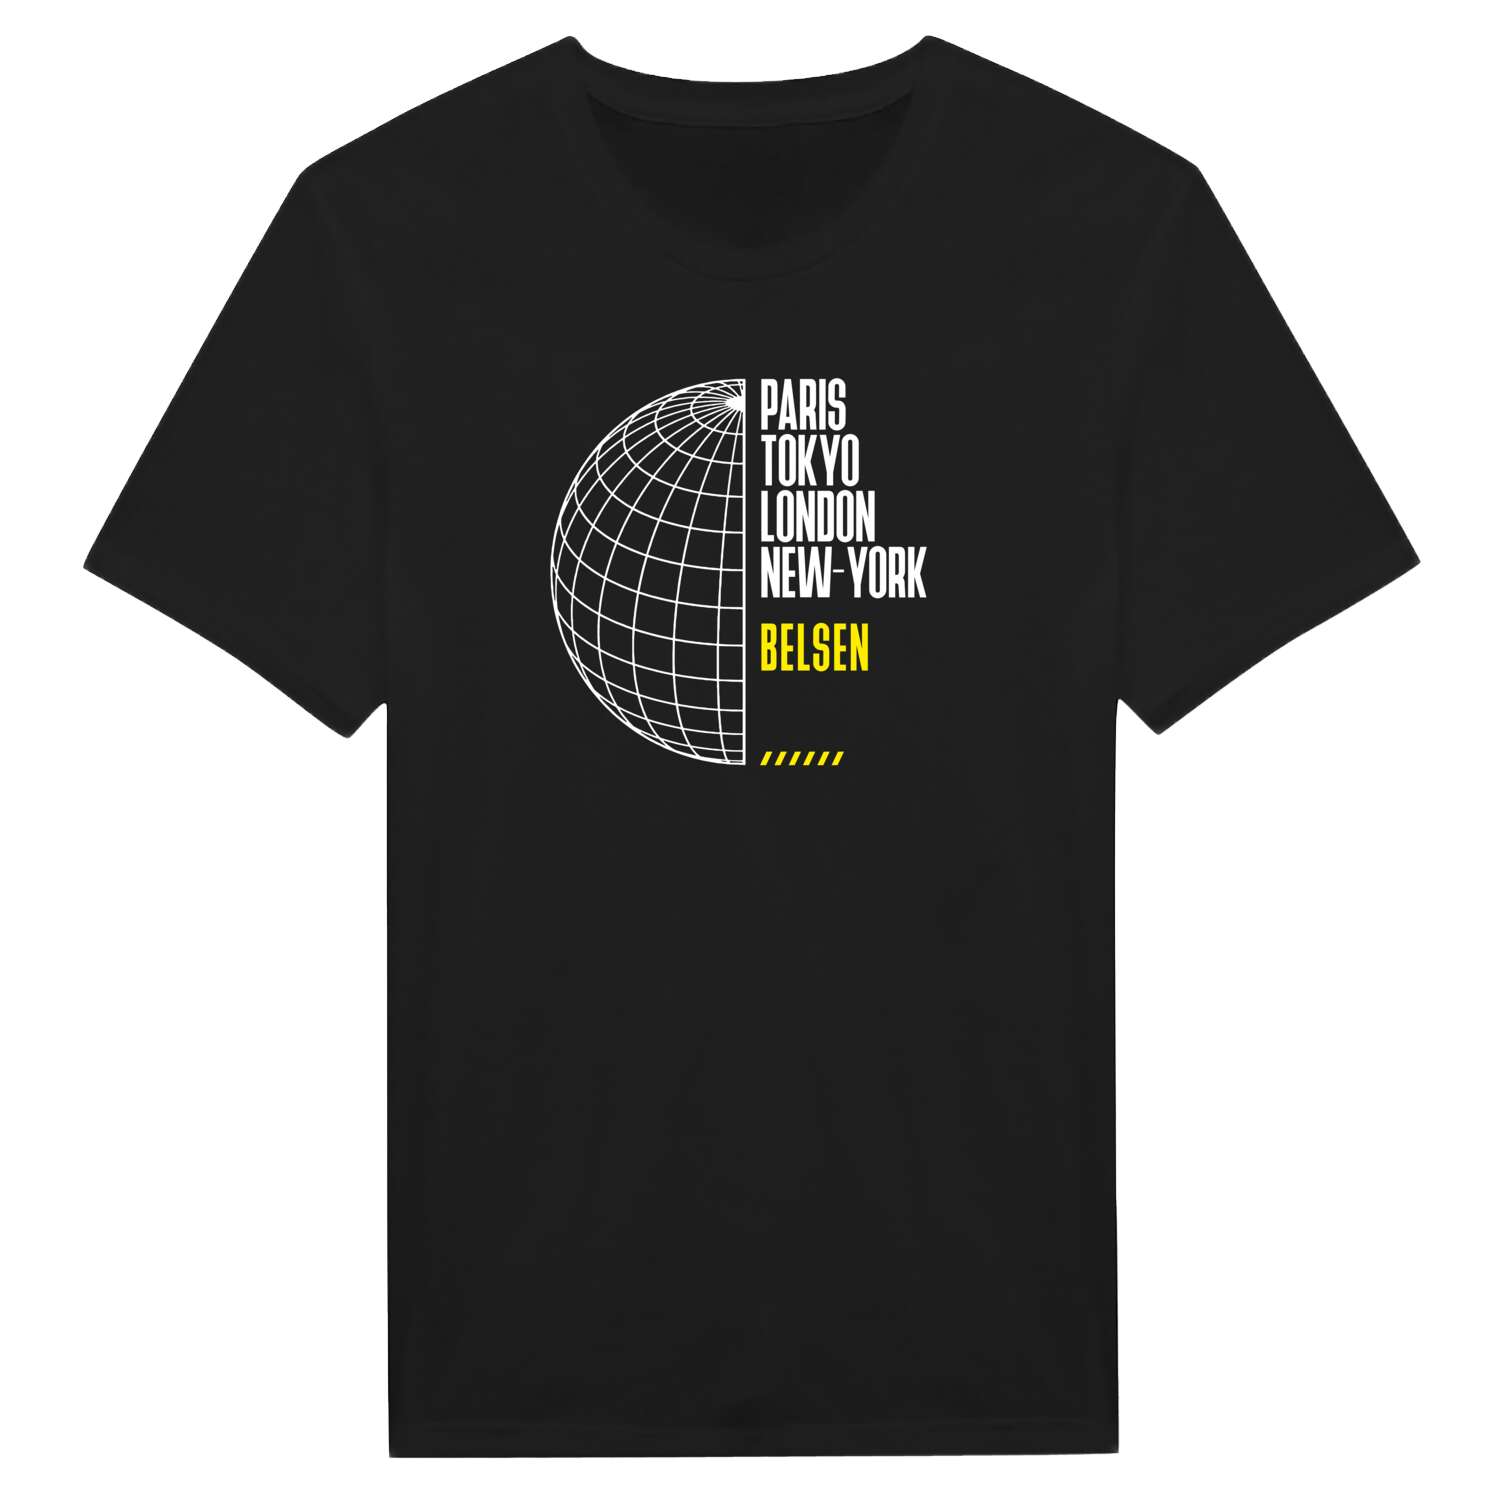 Belsen T-Shirt »Paris Tokyo London«